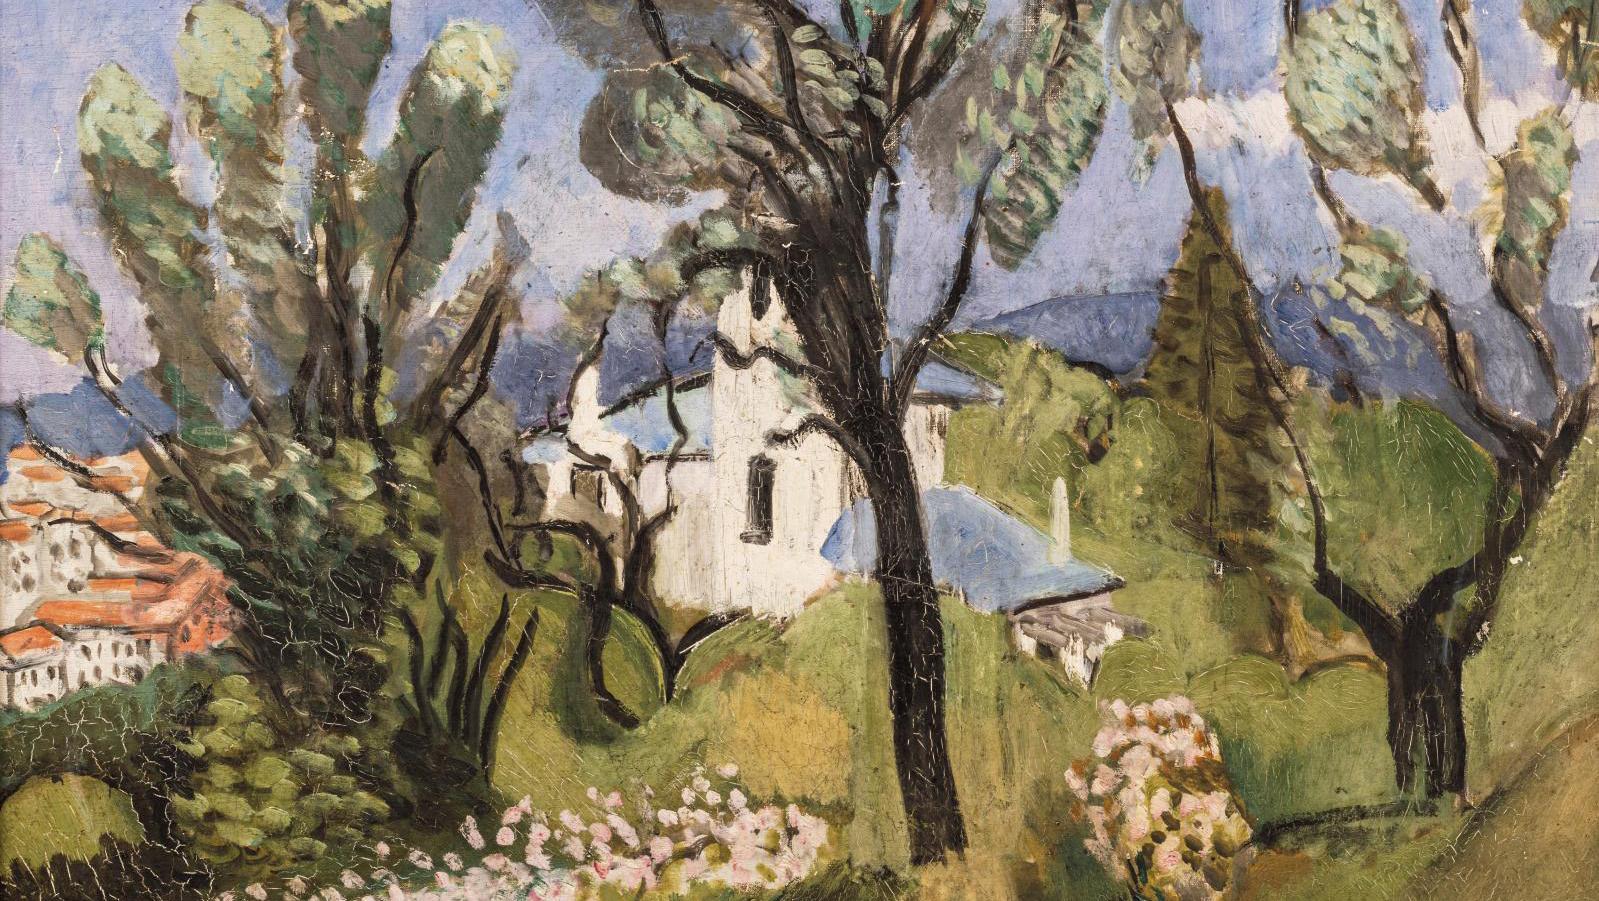 Henri Matisse (1869-1954), La Villa bleue à Nice (The Villa Blue in Nice), 1918, oil on canvas, 54 x 65.4 cm/21.26 x 25.74 in. © SUCCESSION H. MATISSE Estimate: €150,000/200,000